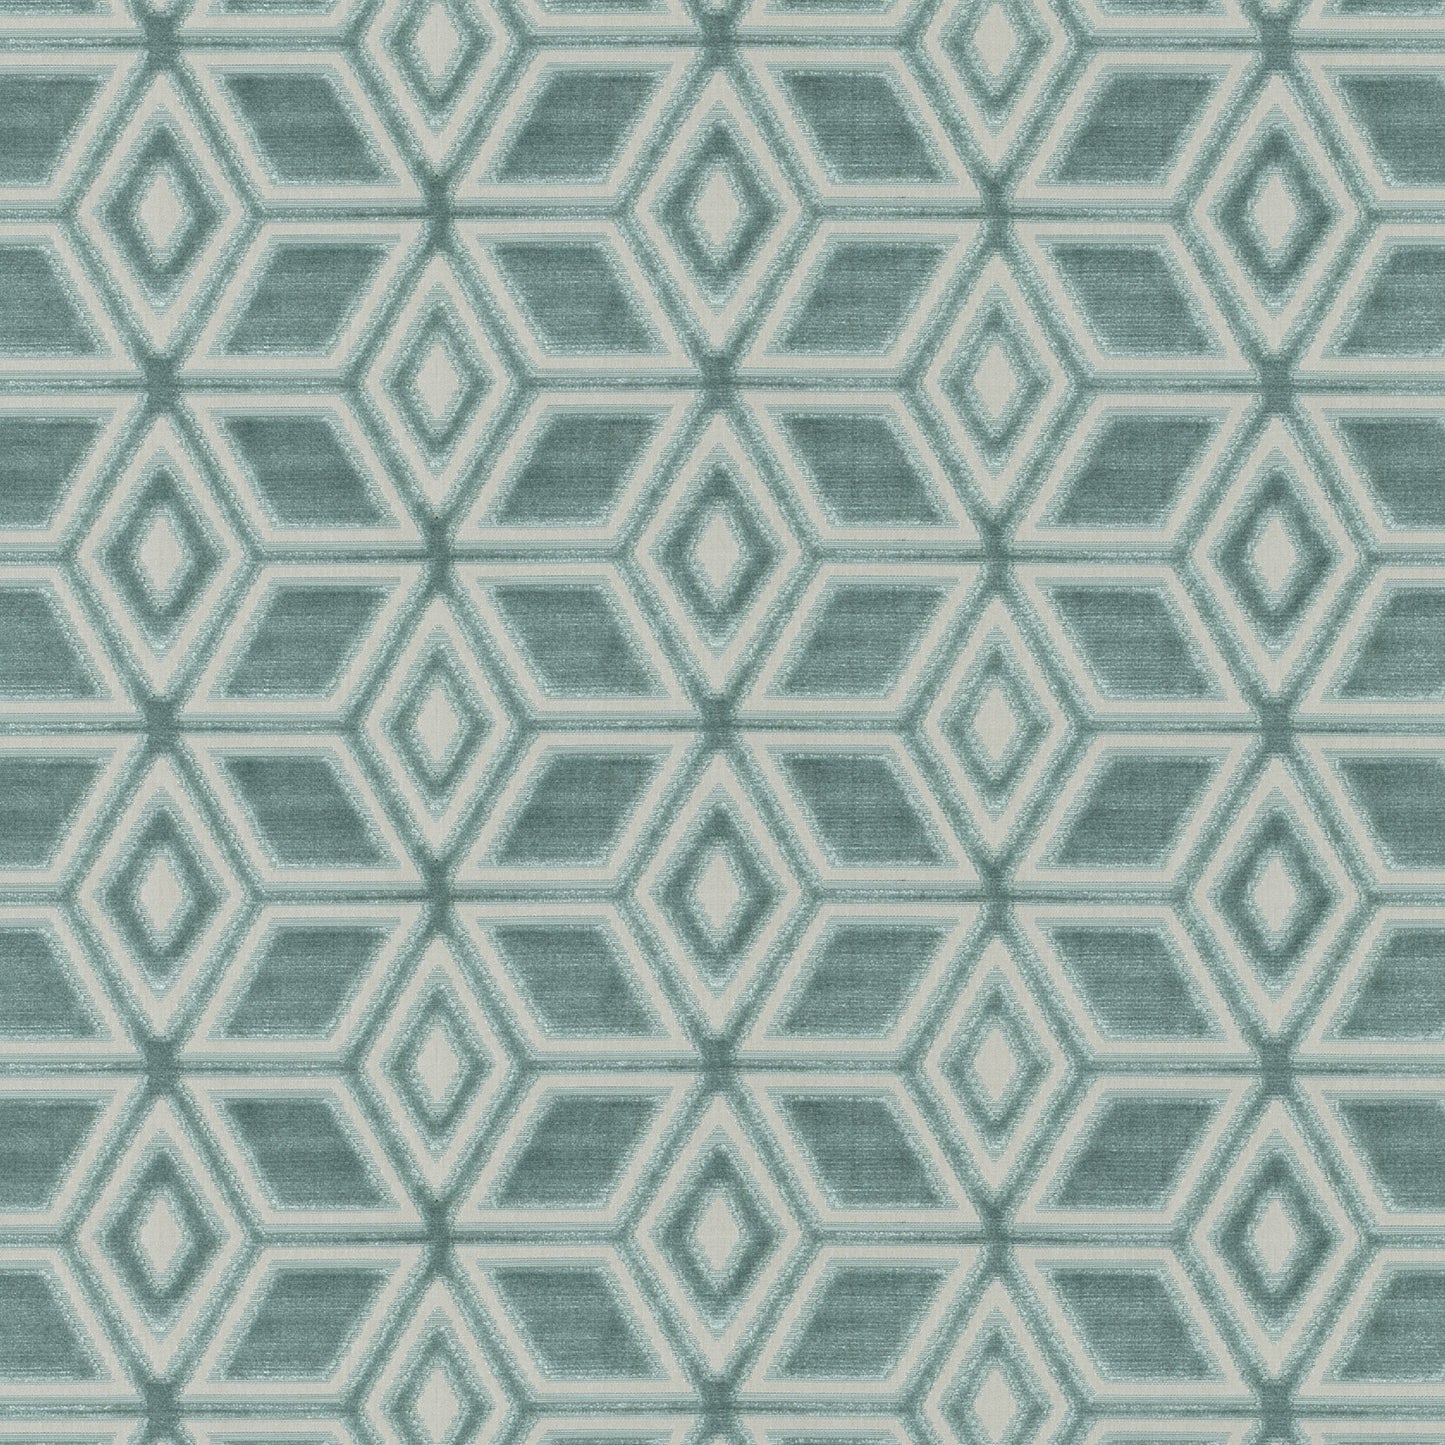 Purchase  Ann French Fabric Item# AW72983  pattern name  Jardin Maze Velvet